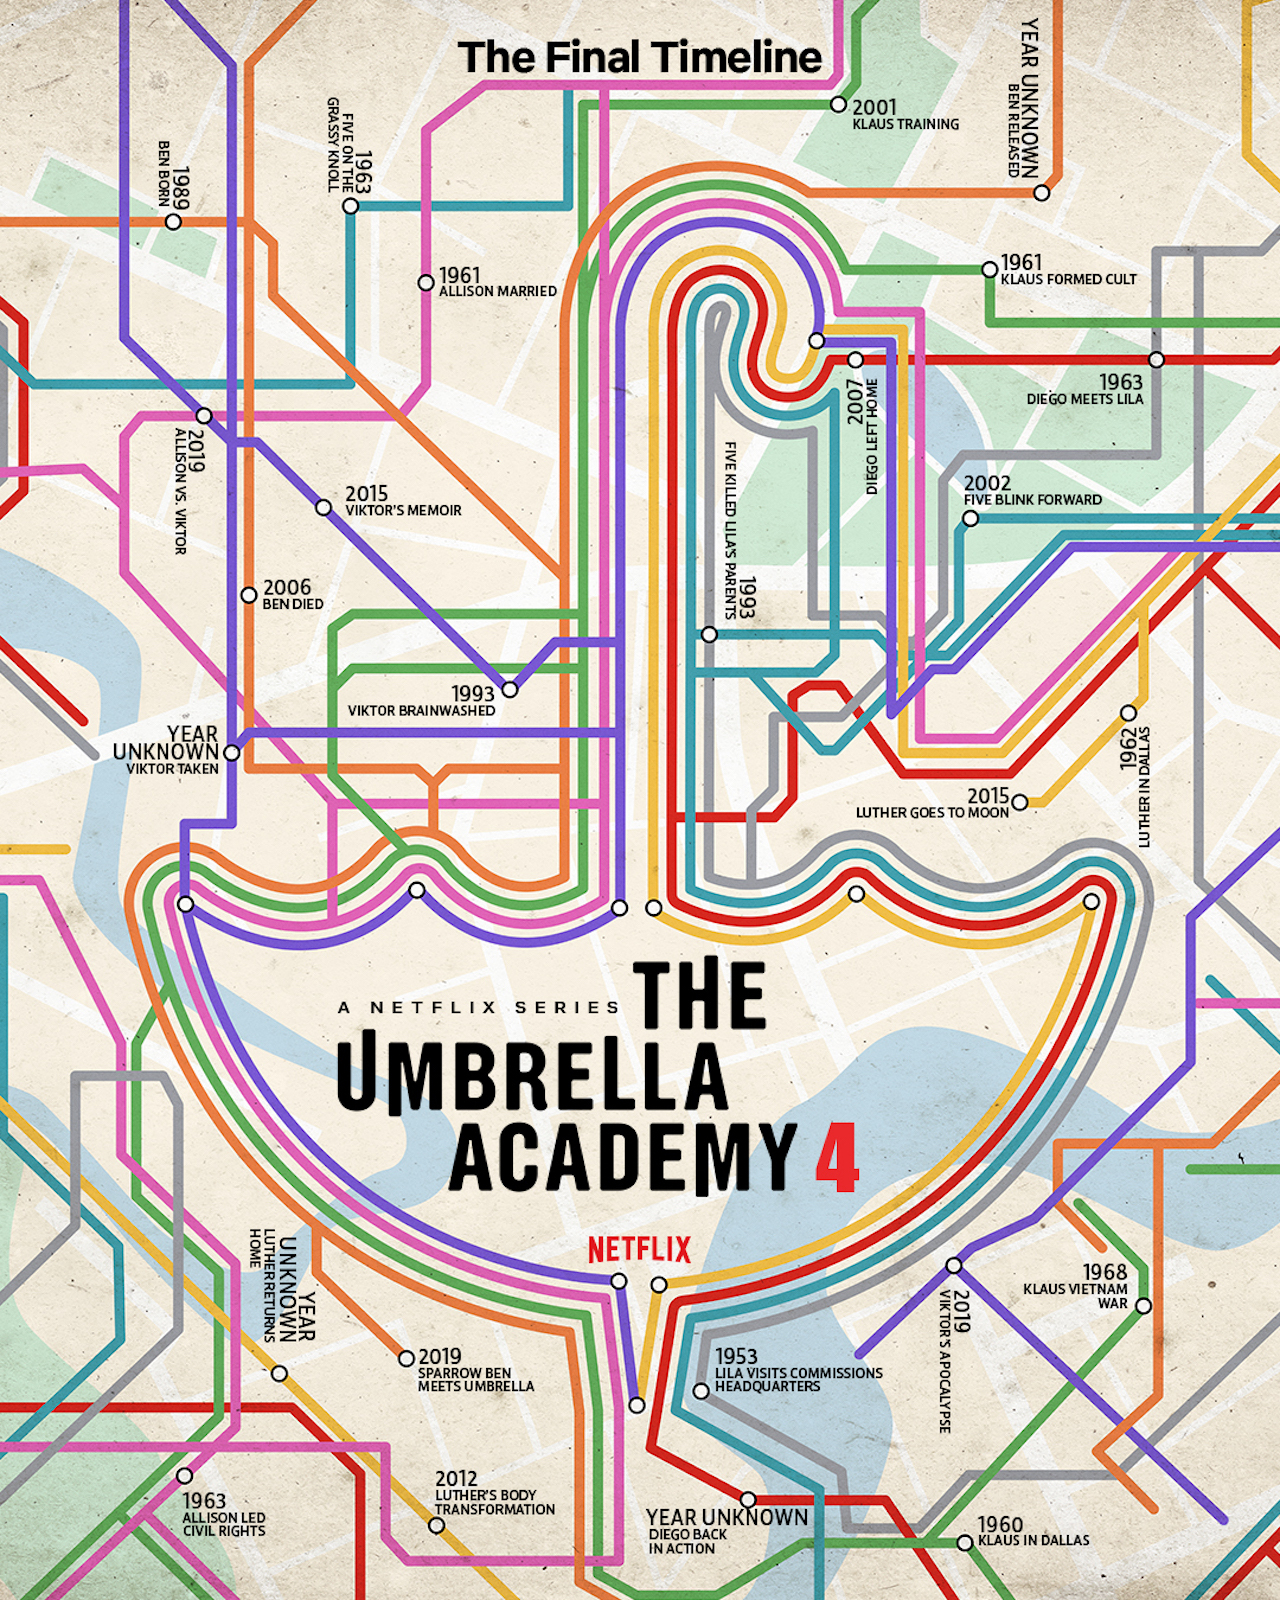 The Umbrella Academy Season 4 timeline poster